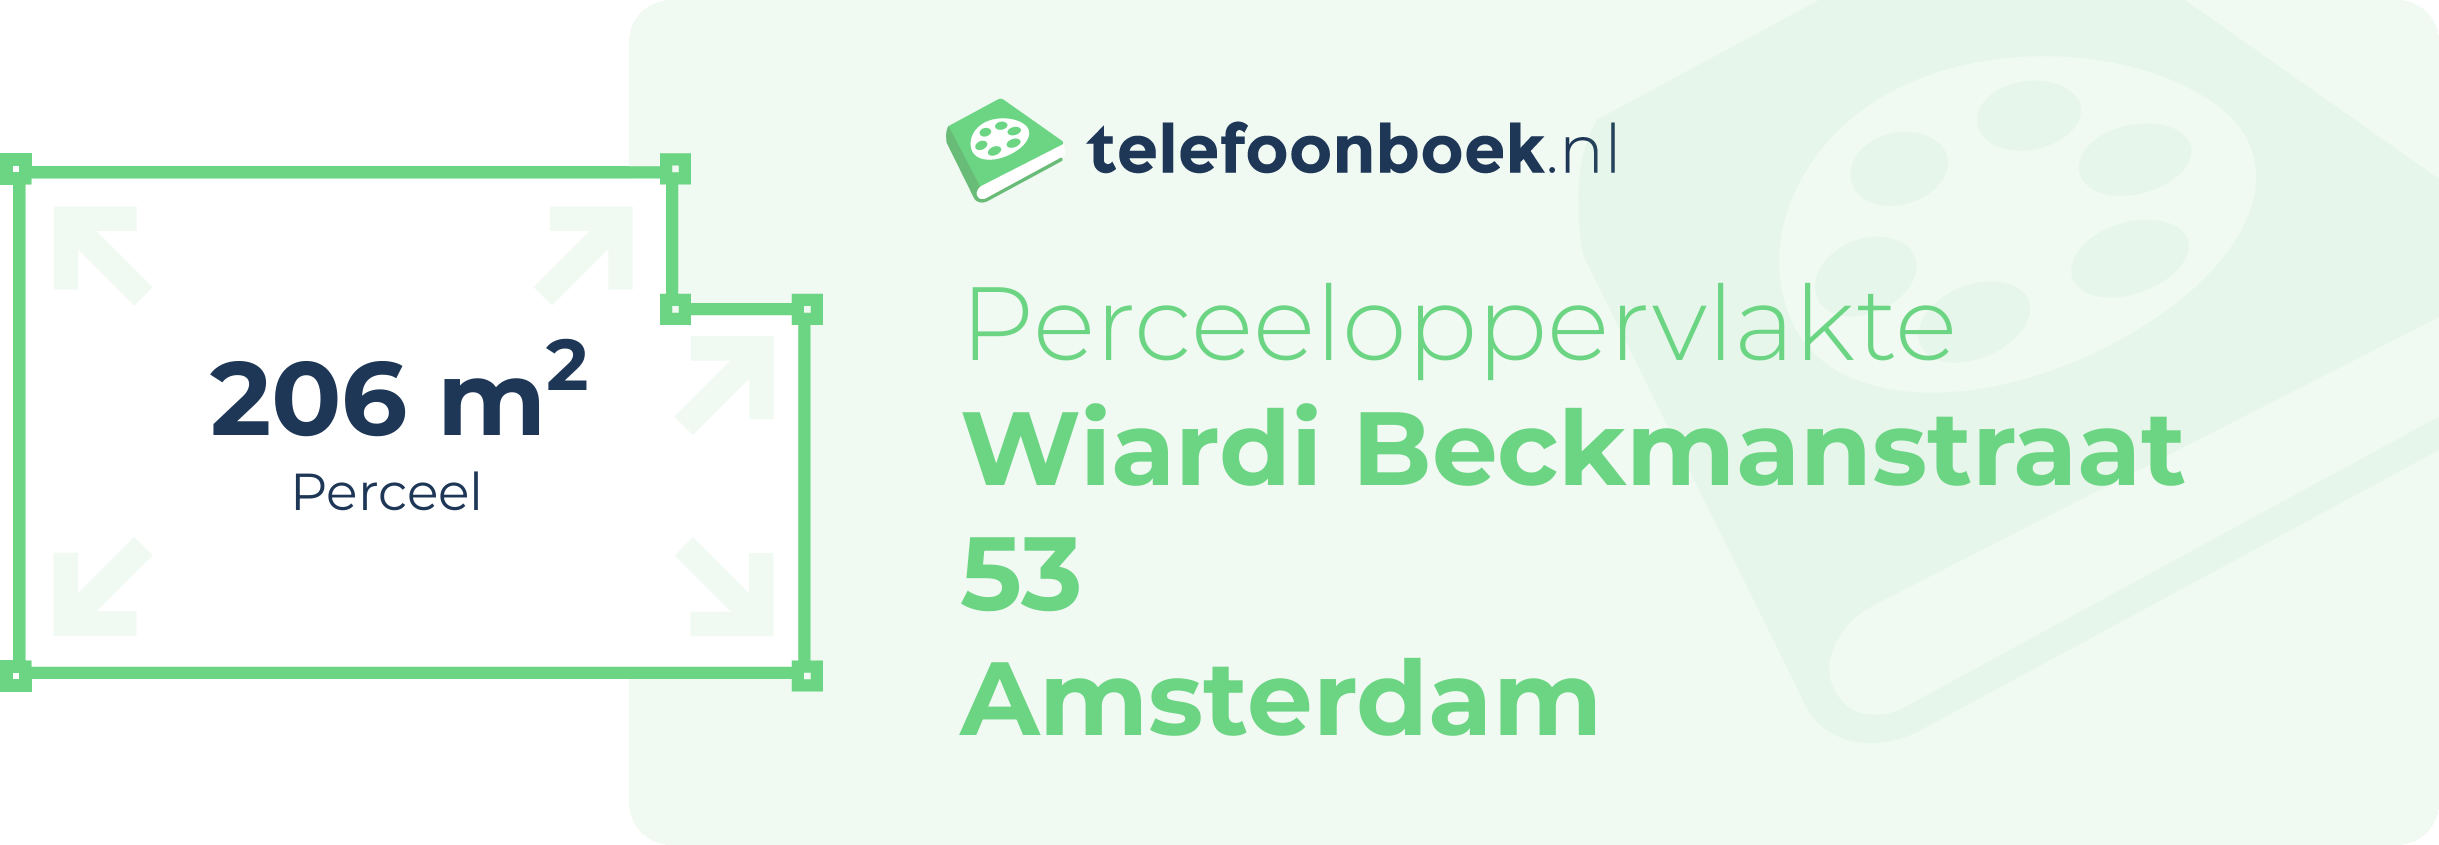 Perceeloppervlakte Wiardi Beckmanstraat 53 Amsterdam